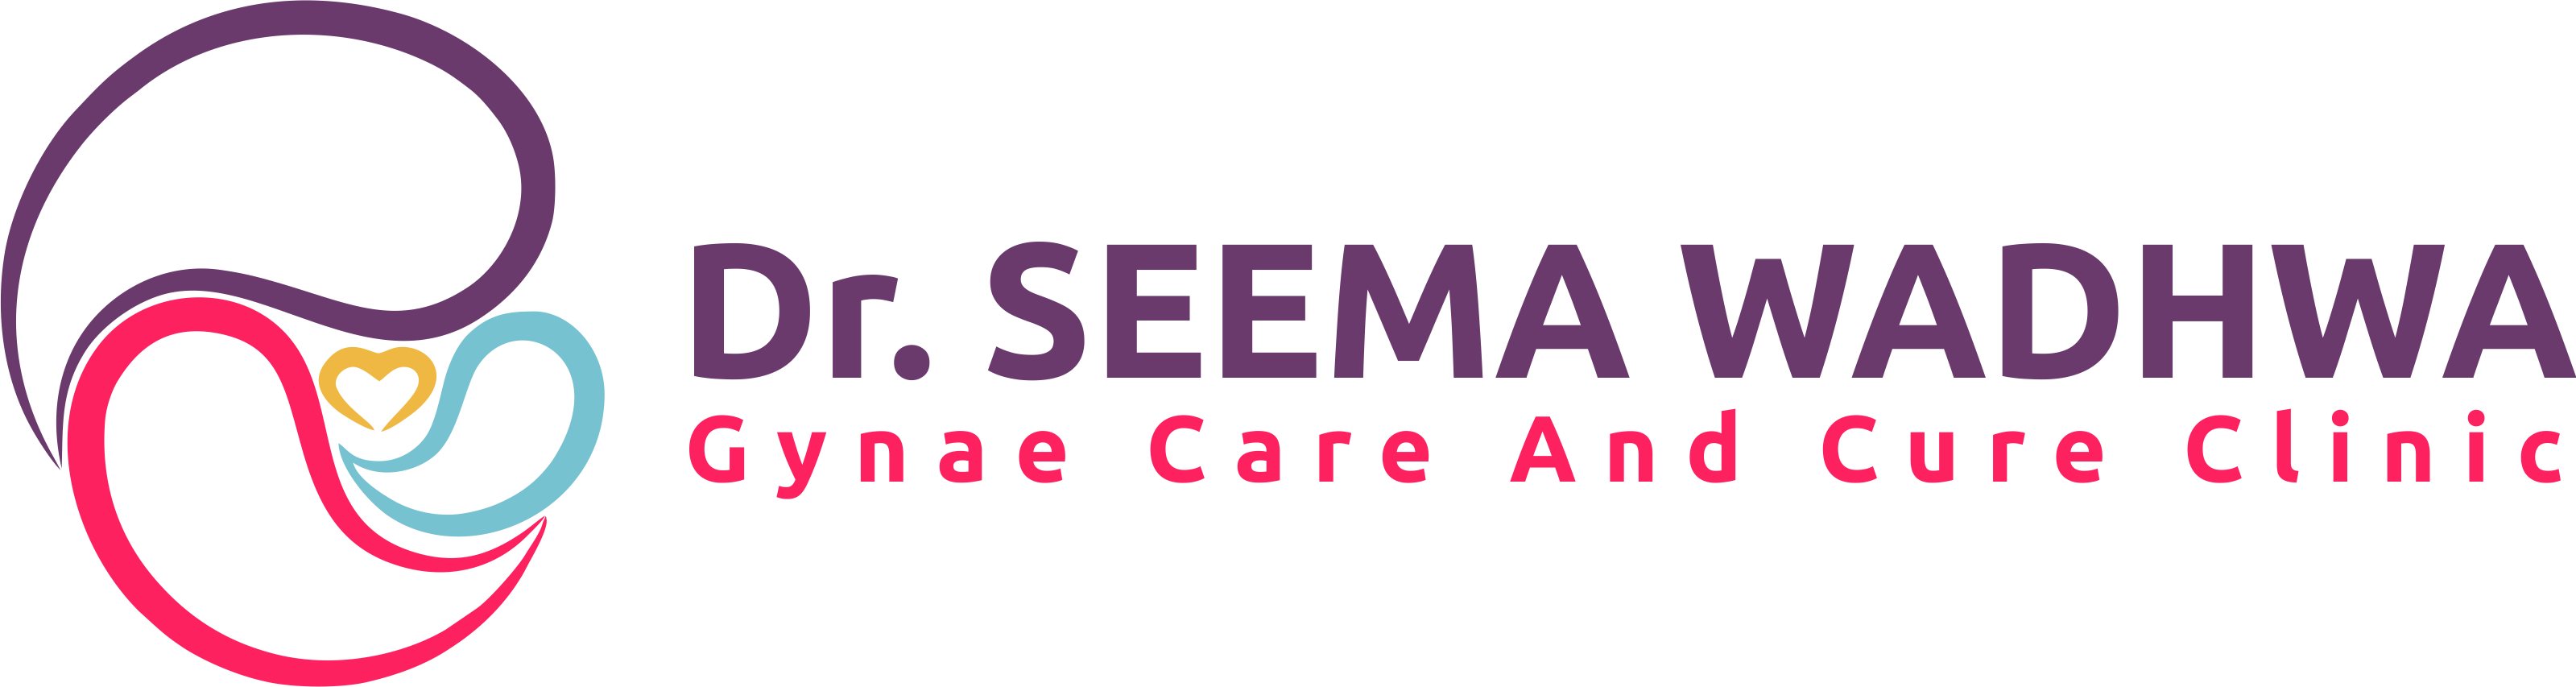 Logo - Dr. Seema Wadhwa